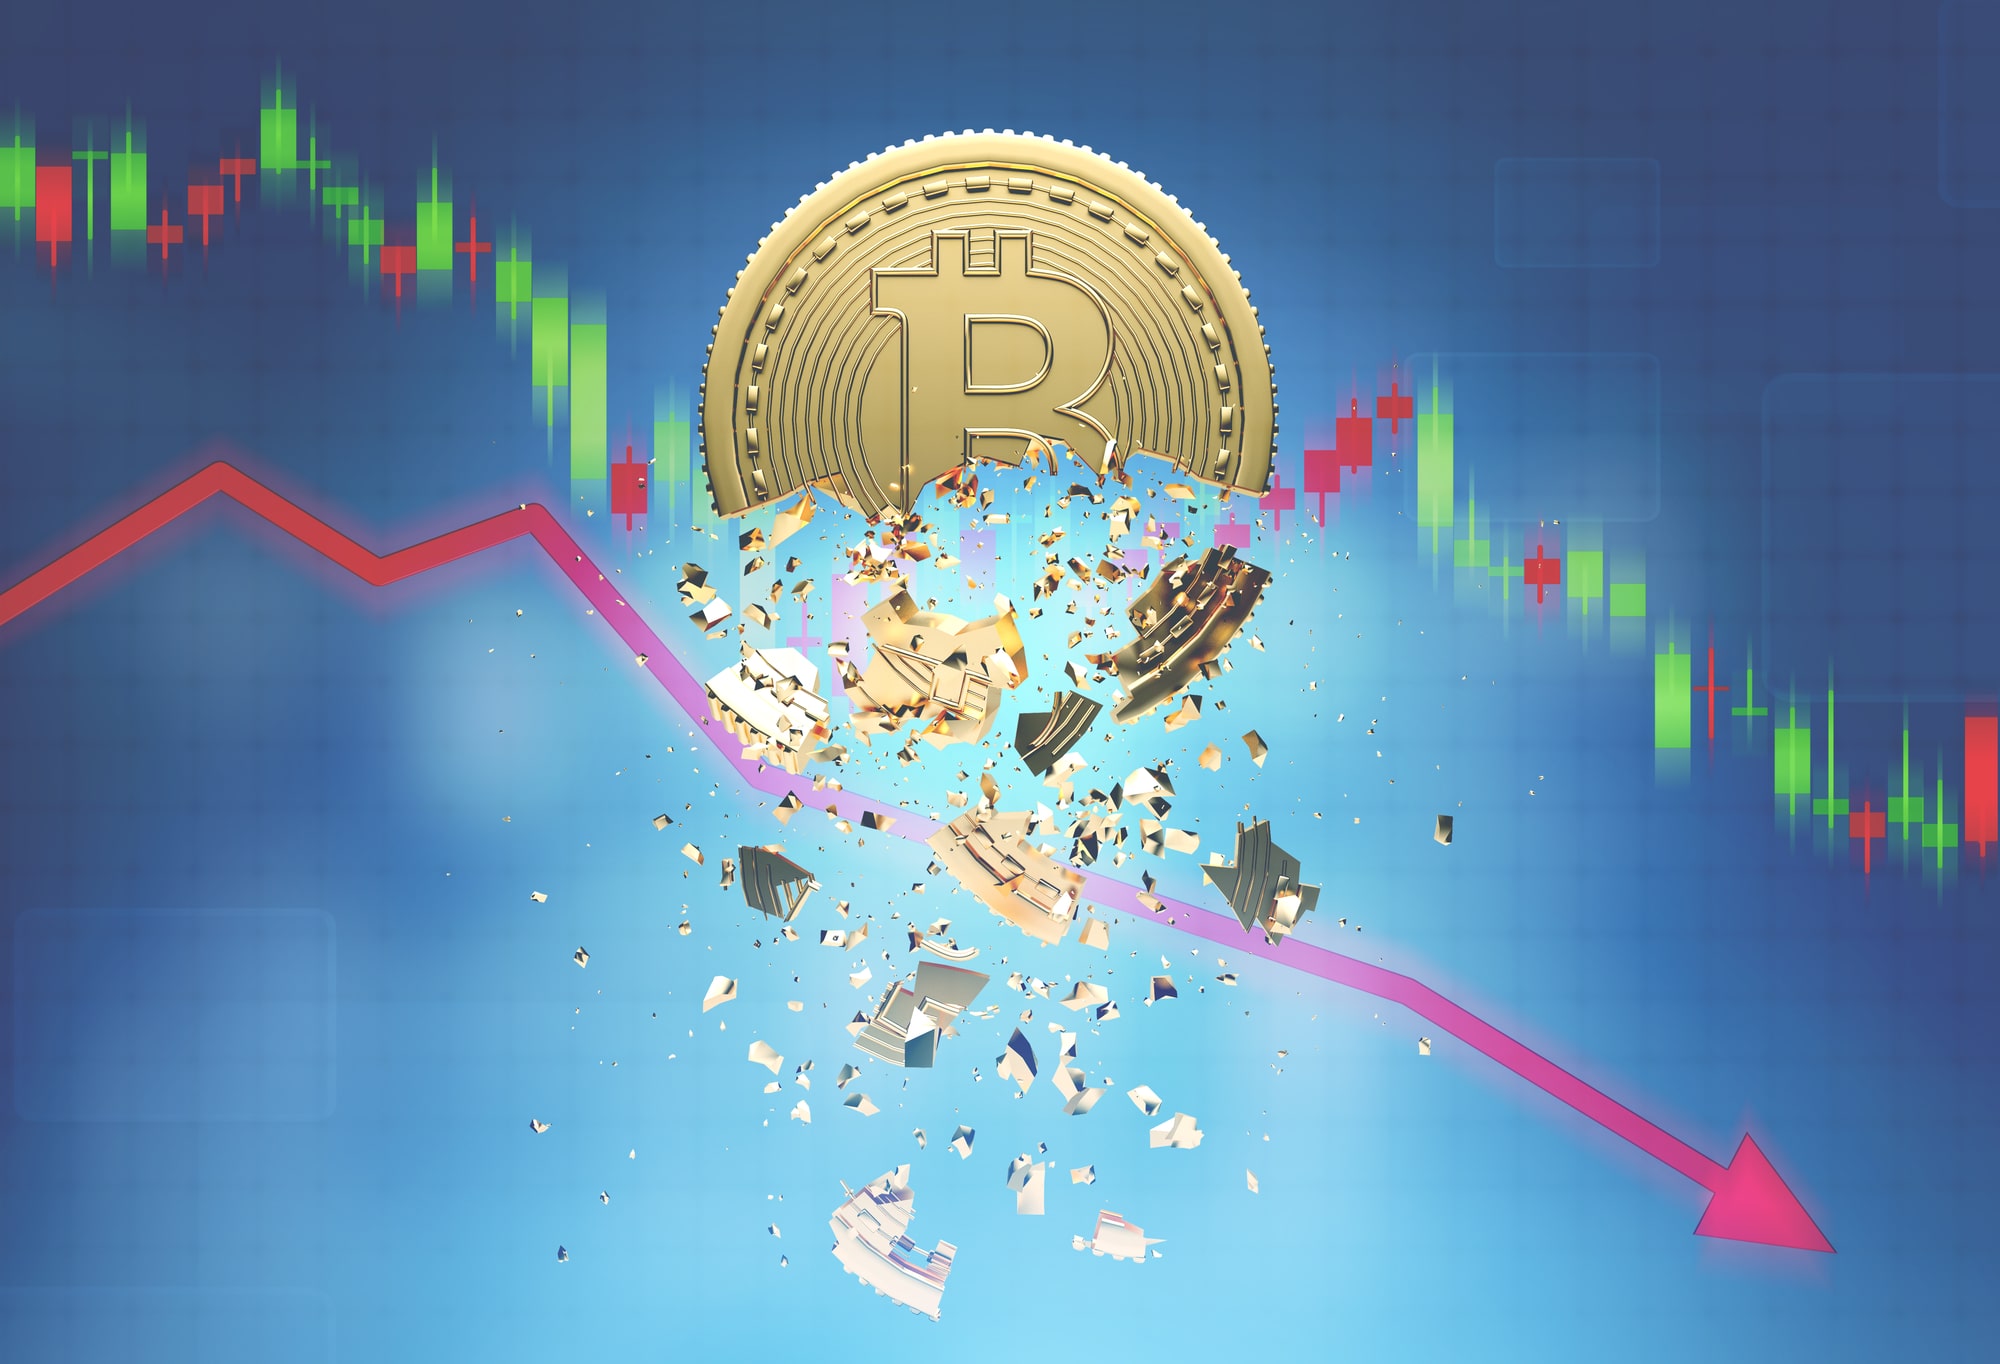 Black Friday crash: Crypto enters bear market on new Covid variant concerns